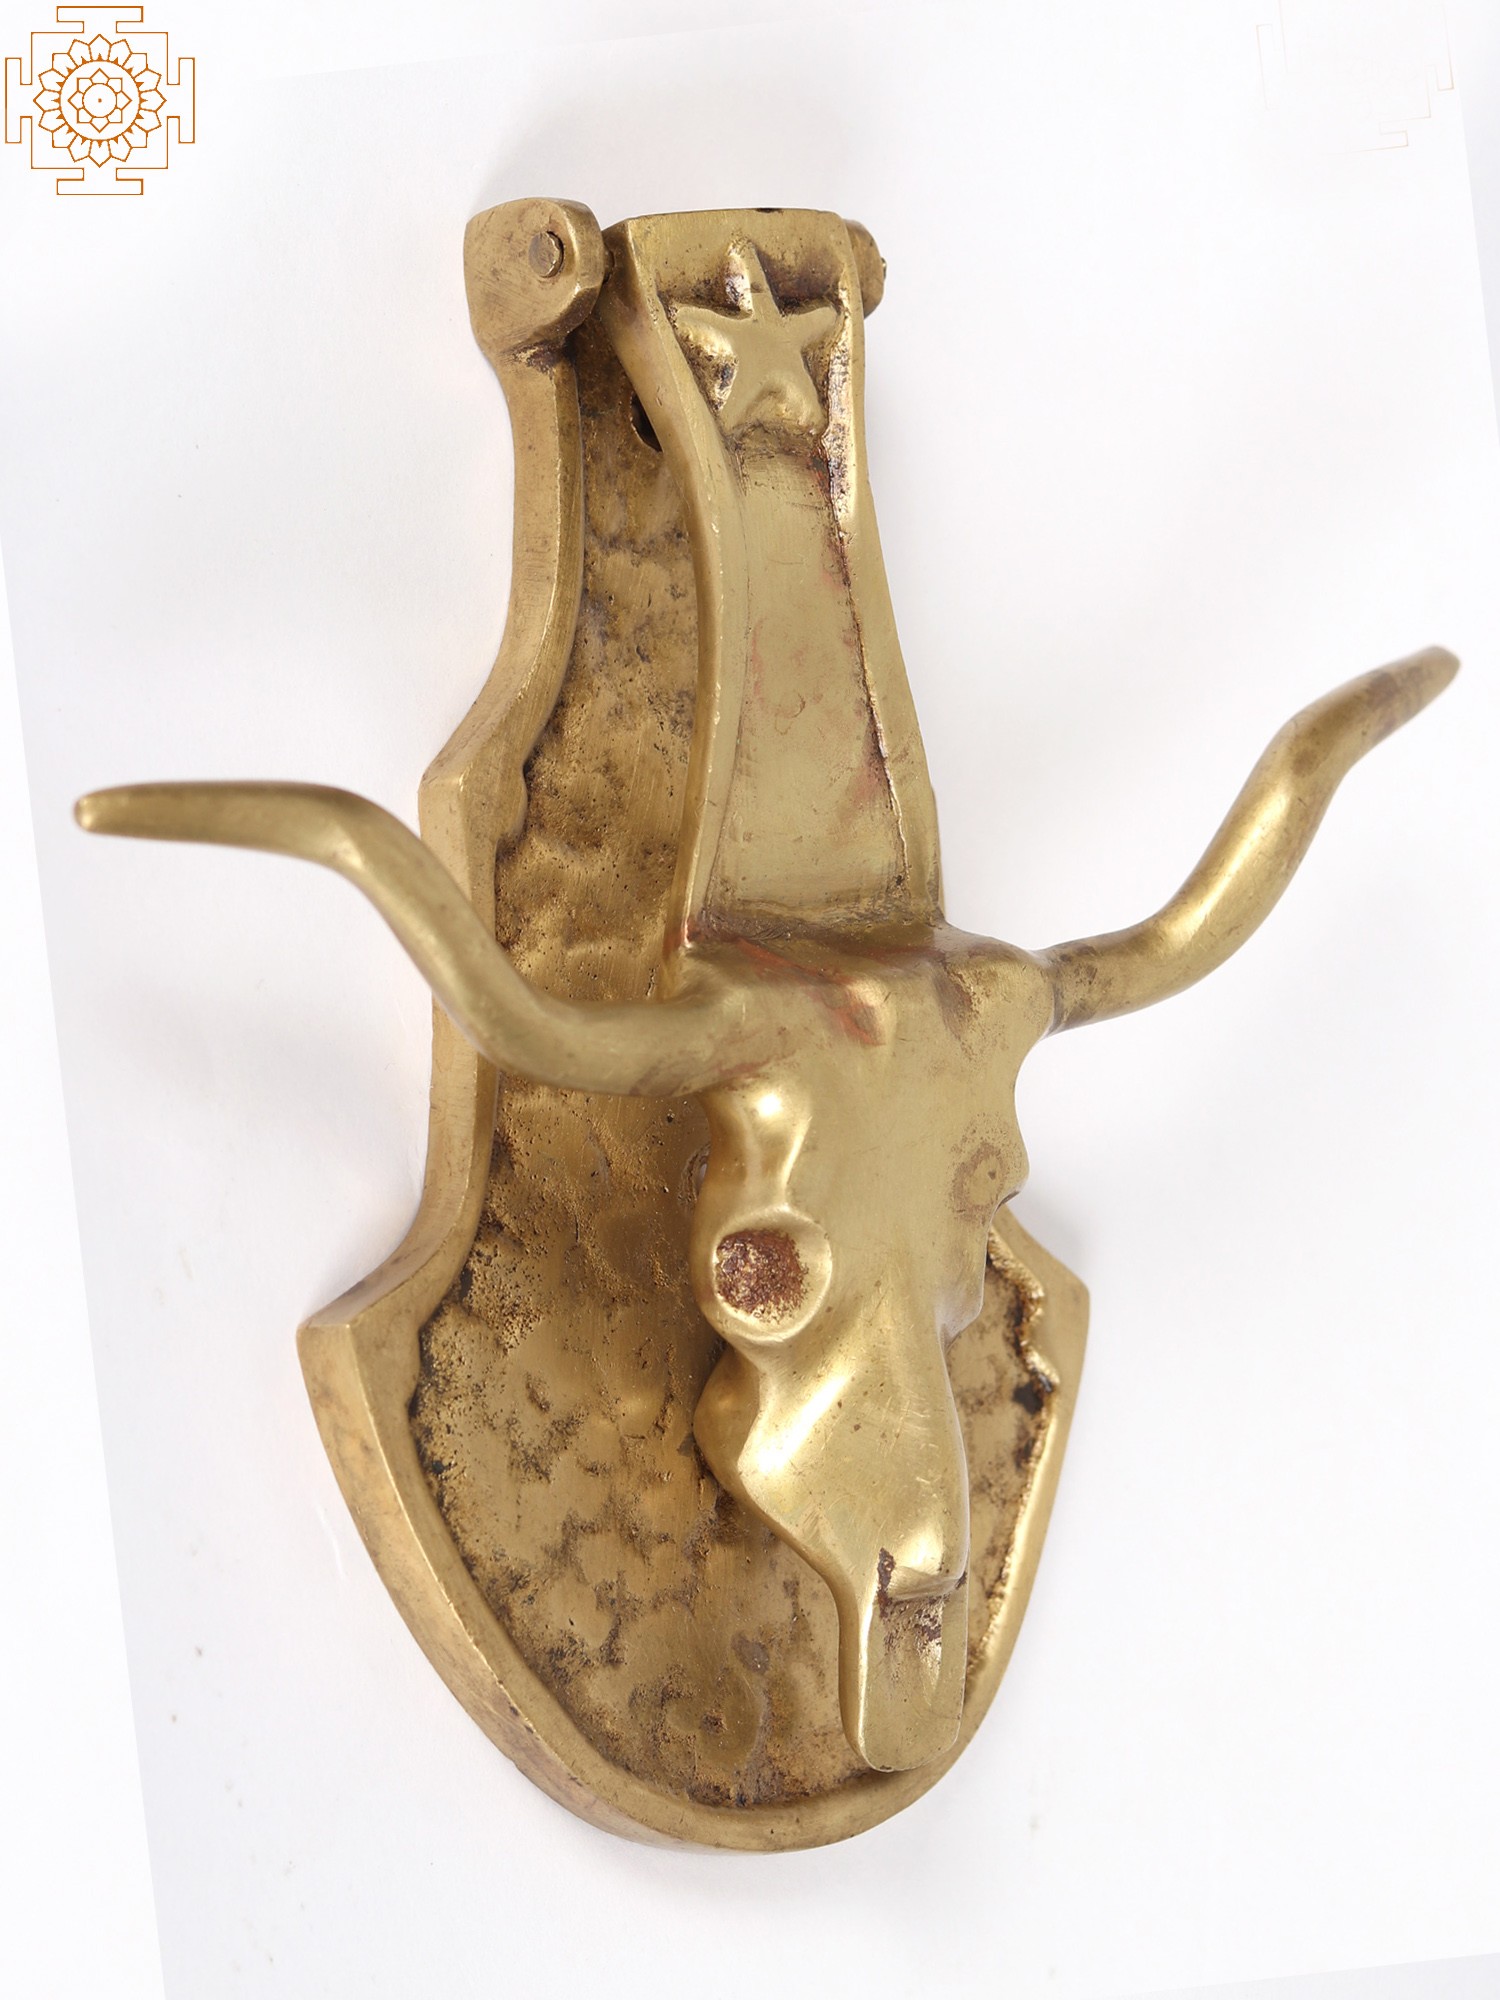 7" Brass Bull Head Door Knocker - Brass - image 2 of 4